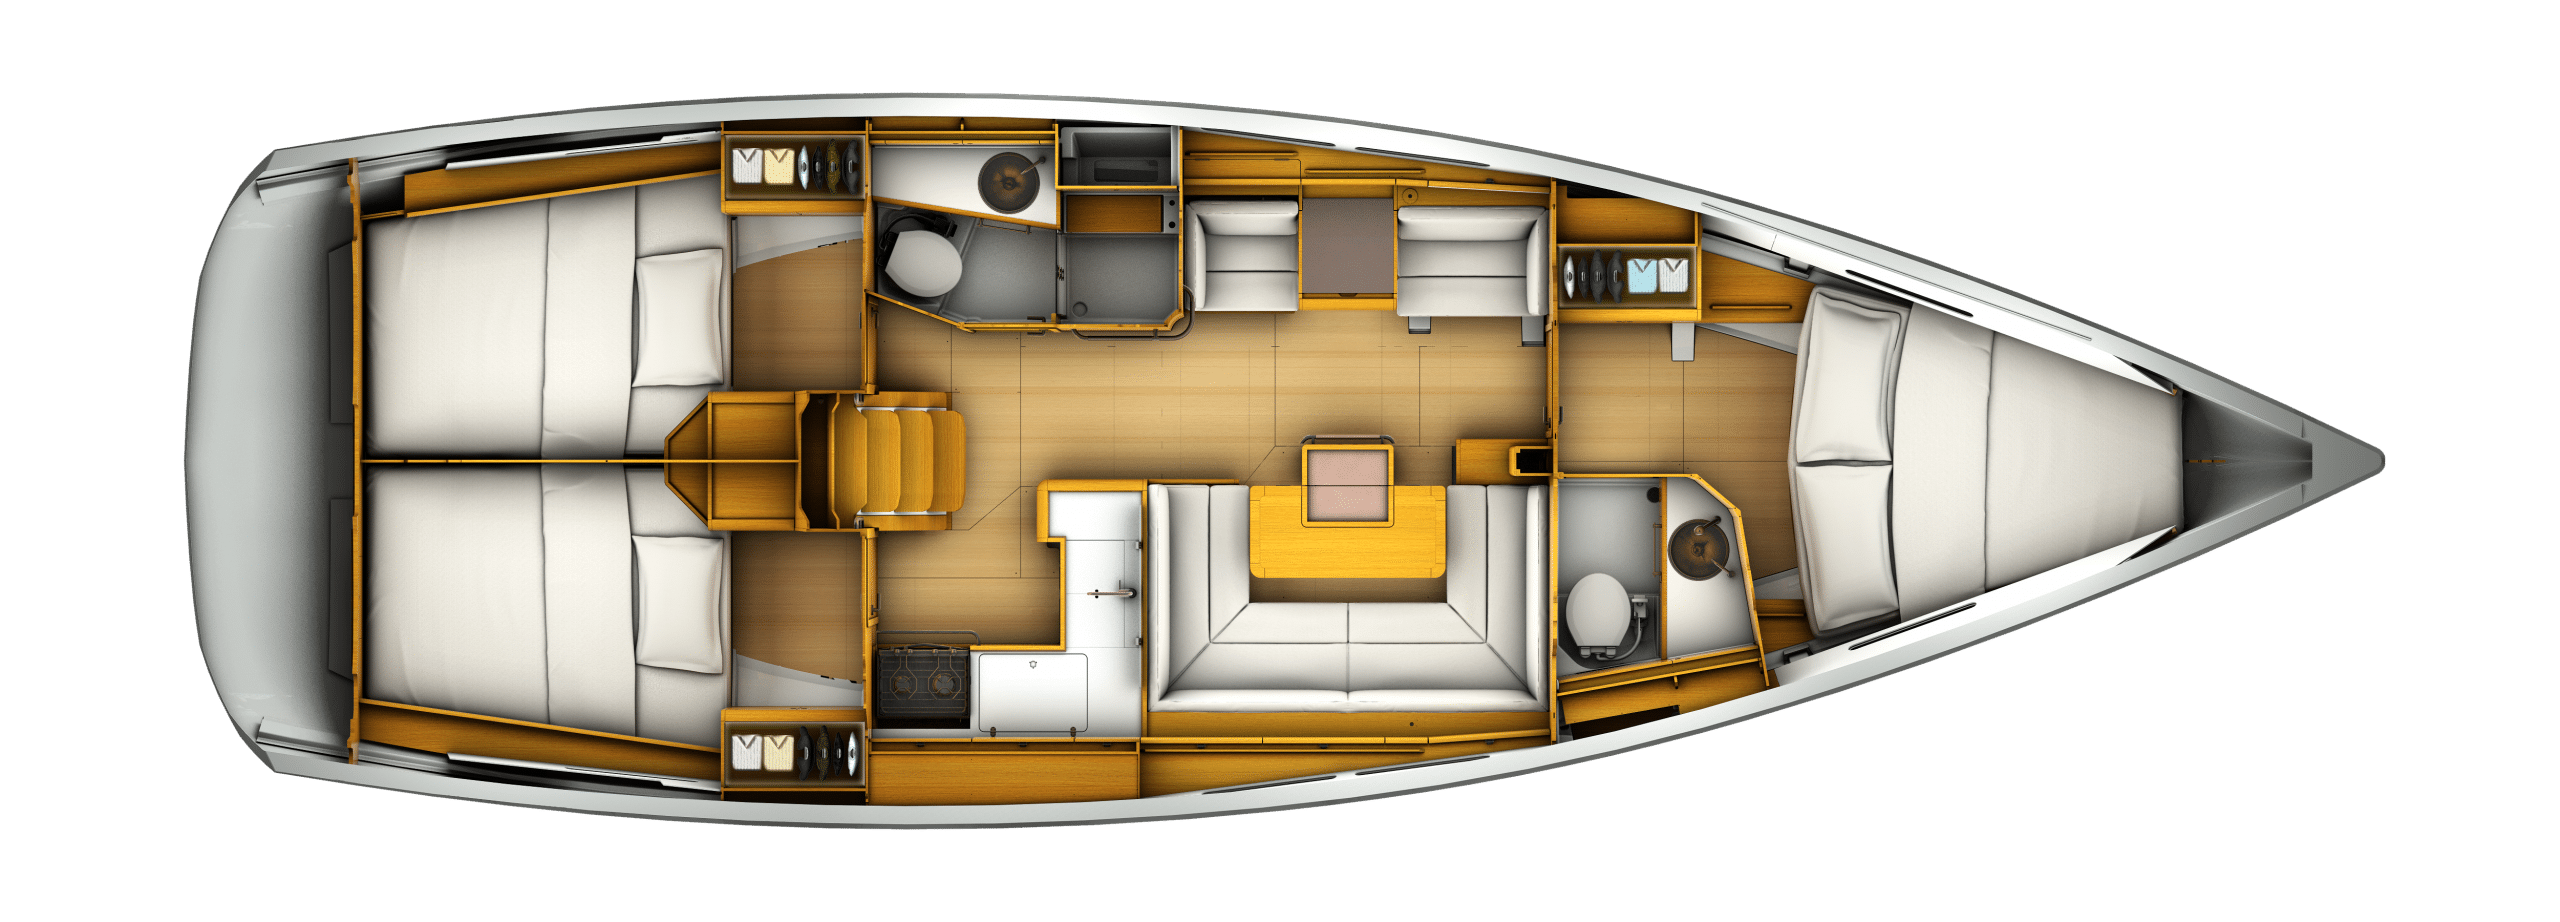 jeanneau-sun-odyssey-419-layout-3-cabins-2-heads